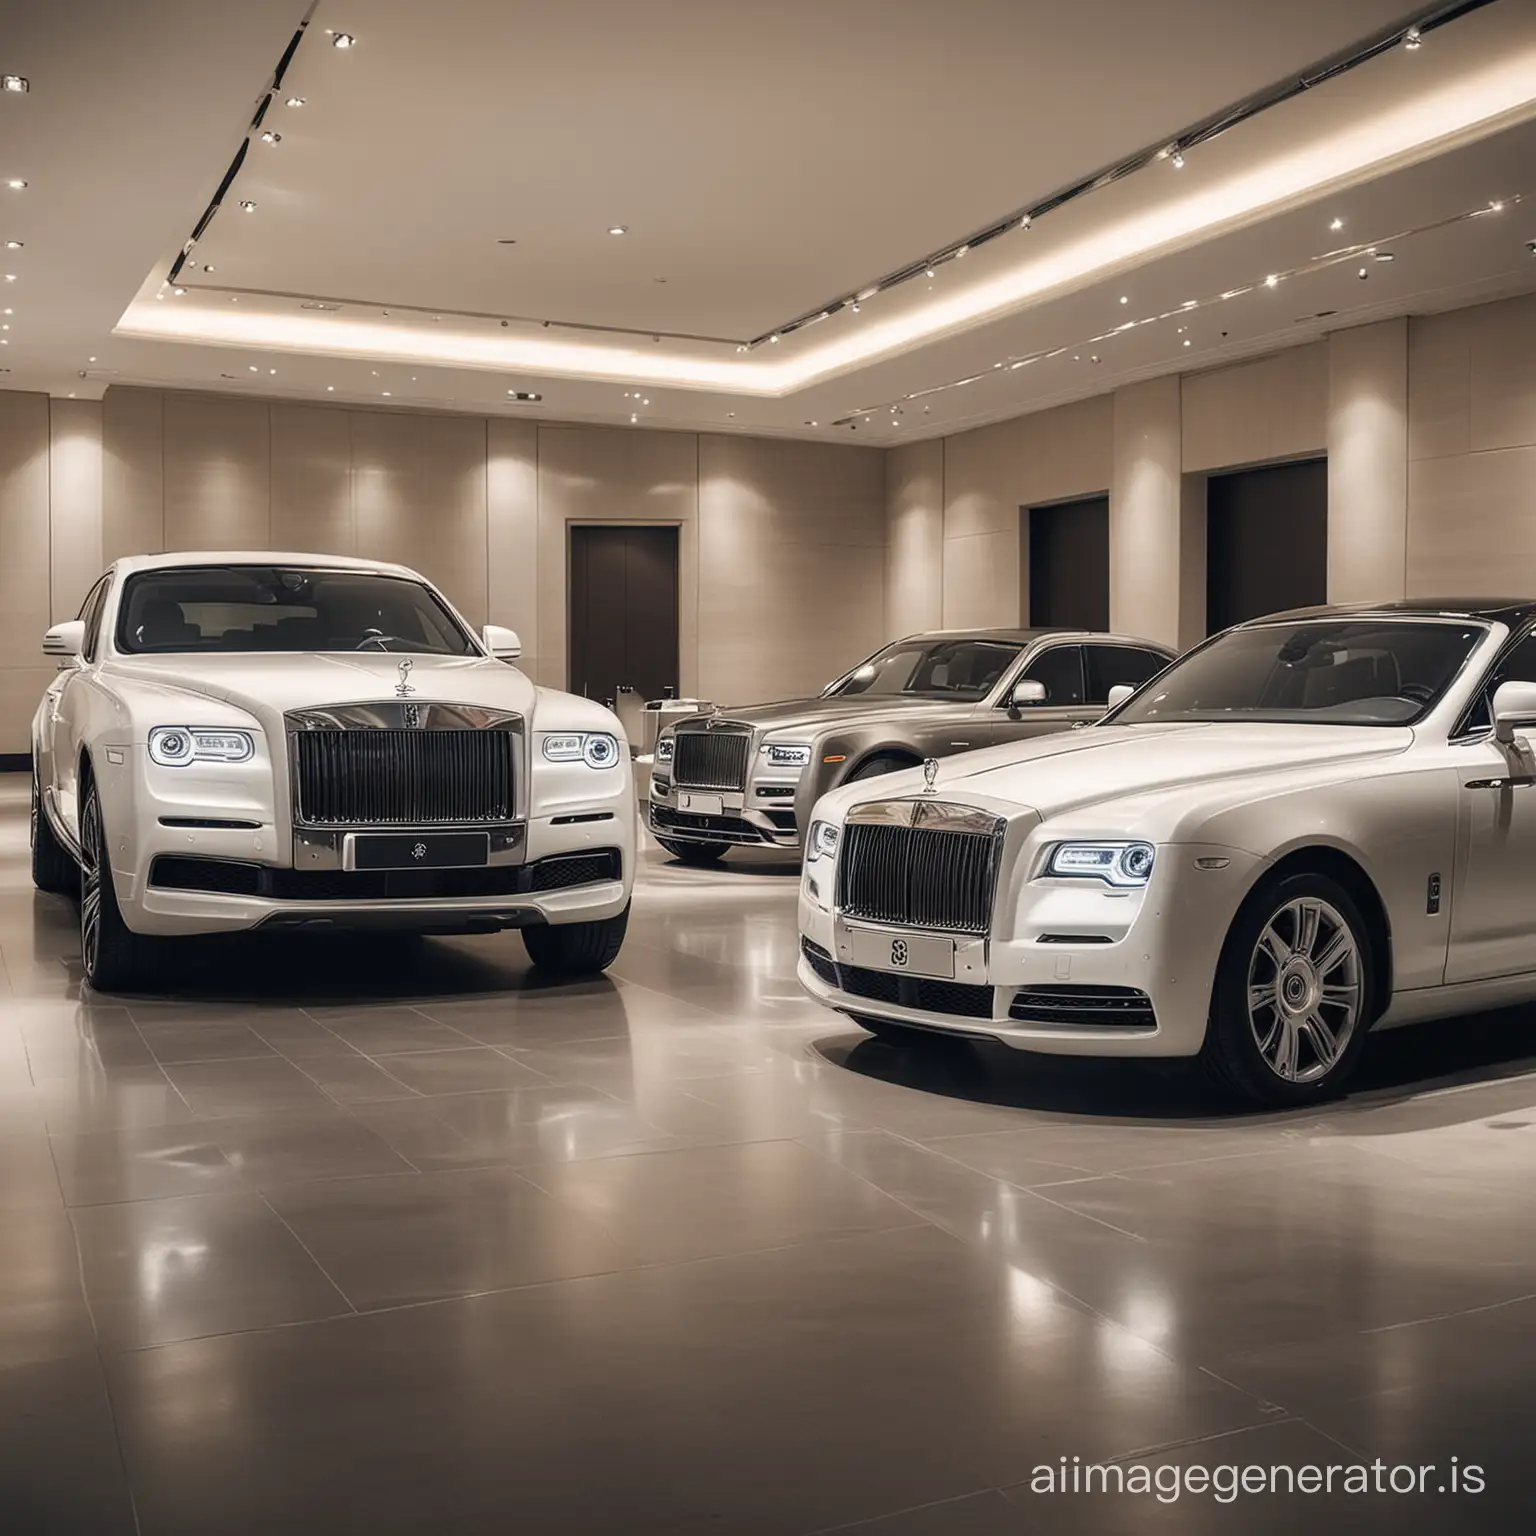 Luxury-Car-Showcase-RollsRoyce-MercedesBenz-BMW-in-Lavishly-Illuminated-Room